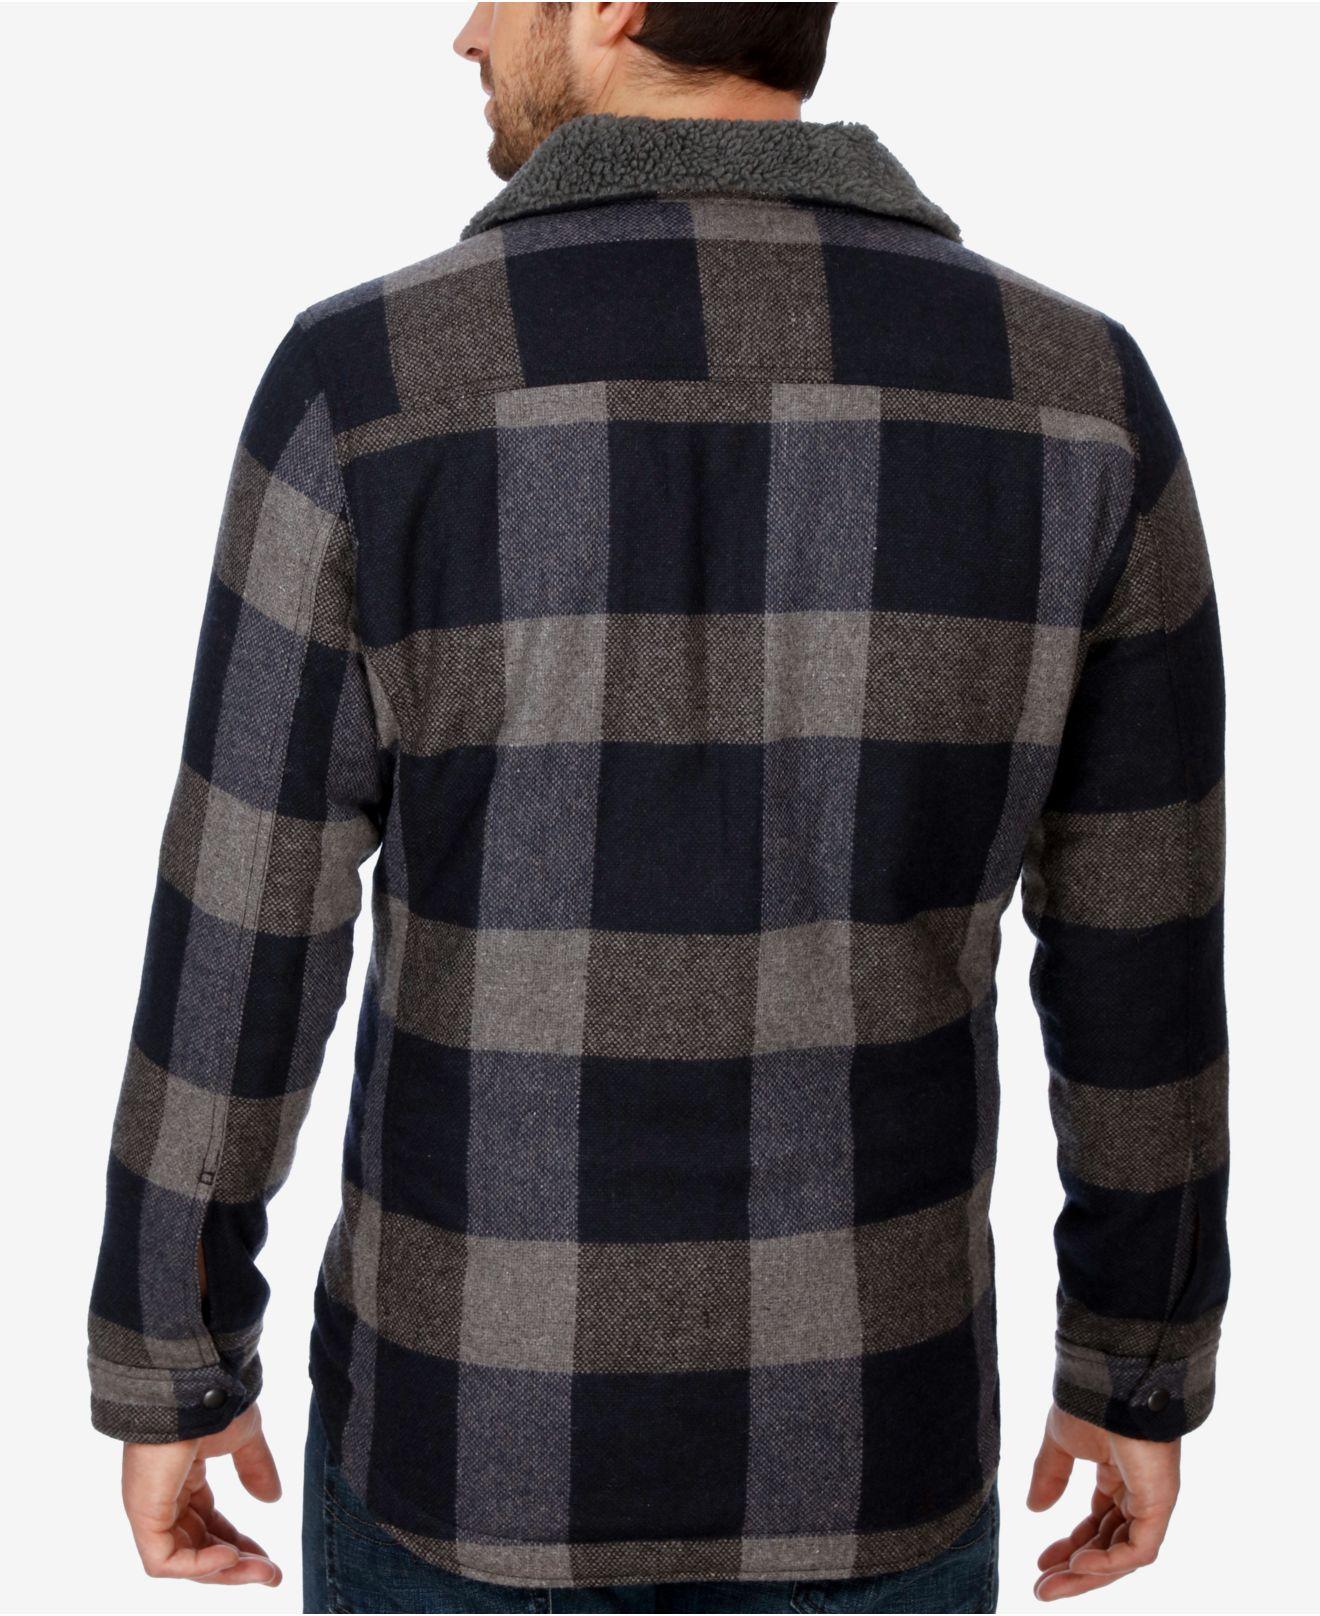 Lucky Brand Wool Men's Buffalo Plaid Jacket in Gray for Men - Lyst